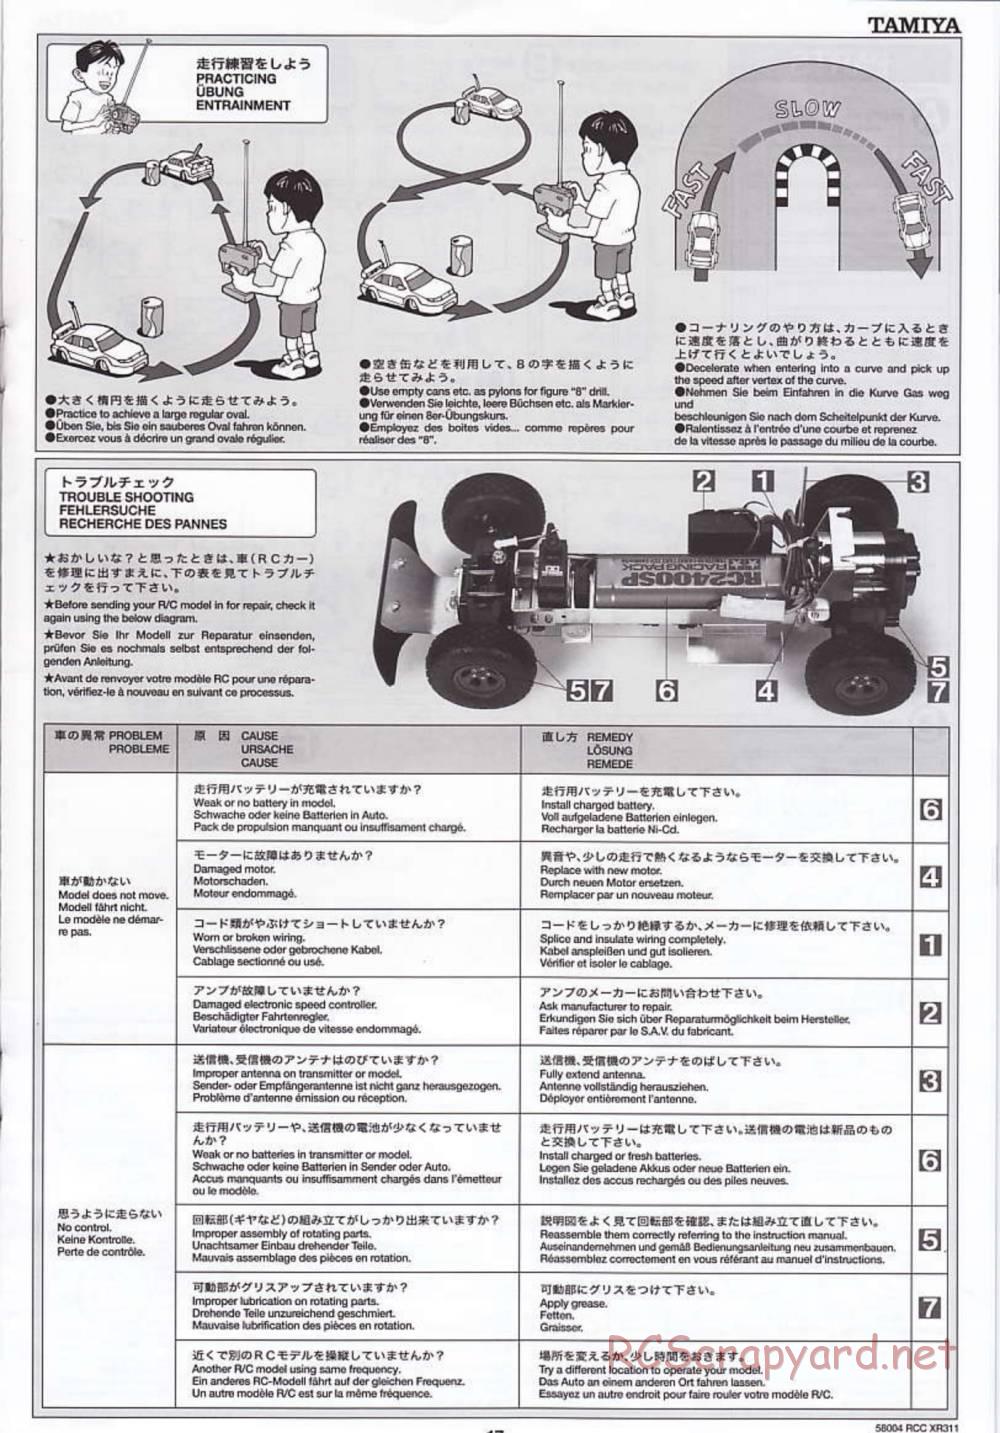 Tamiya - XR311 Combat Support Vehicle (2000) - 58004 - Manual - Page 18